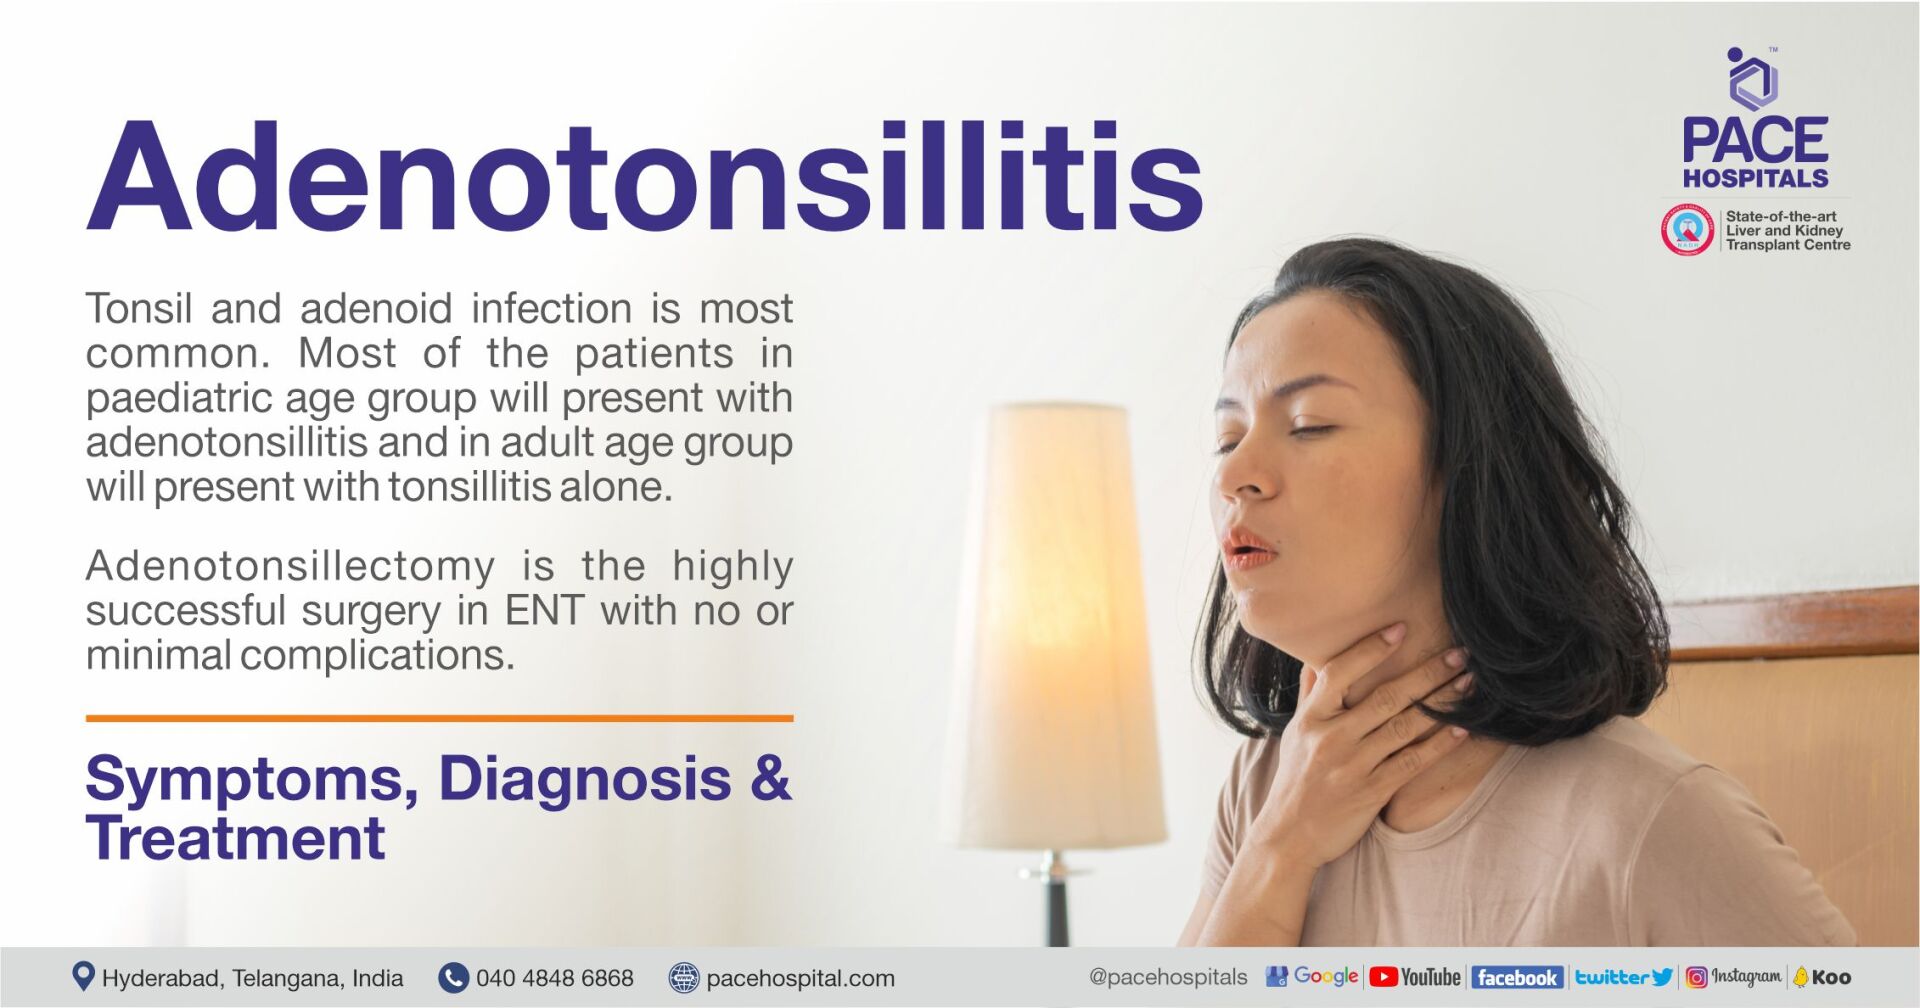 Adenotonsillitis - Symptoms, Diagnosis and Treatment | Tonsillectomy and Adenotonsillectomy